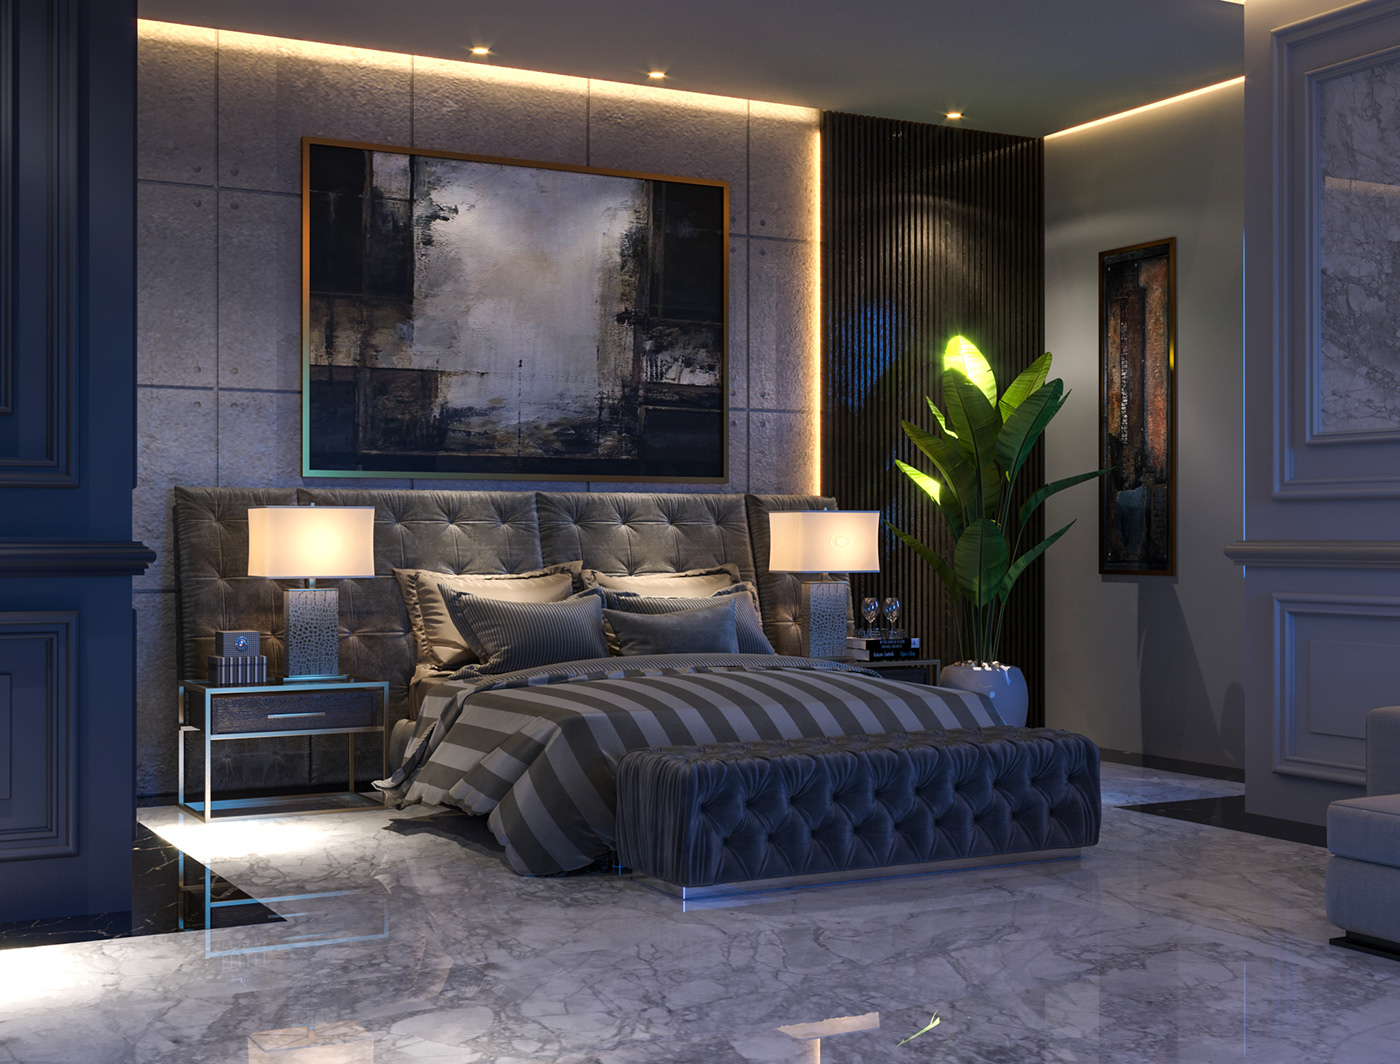 Luxury Bedroom on Behance